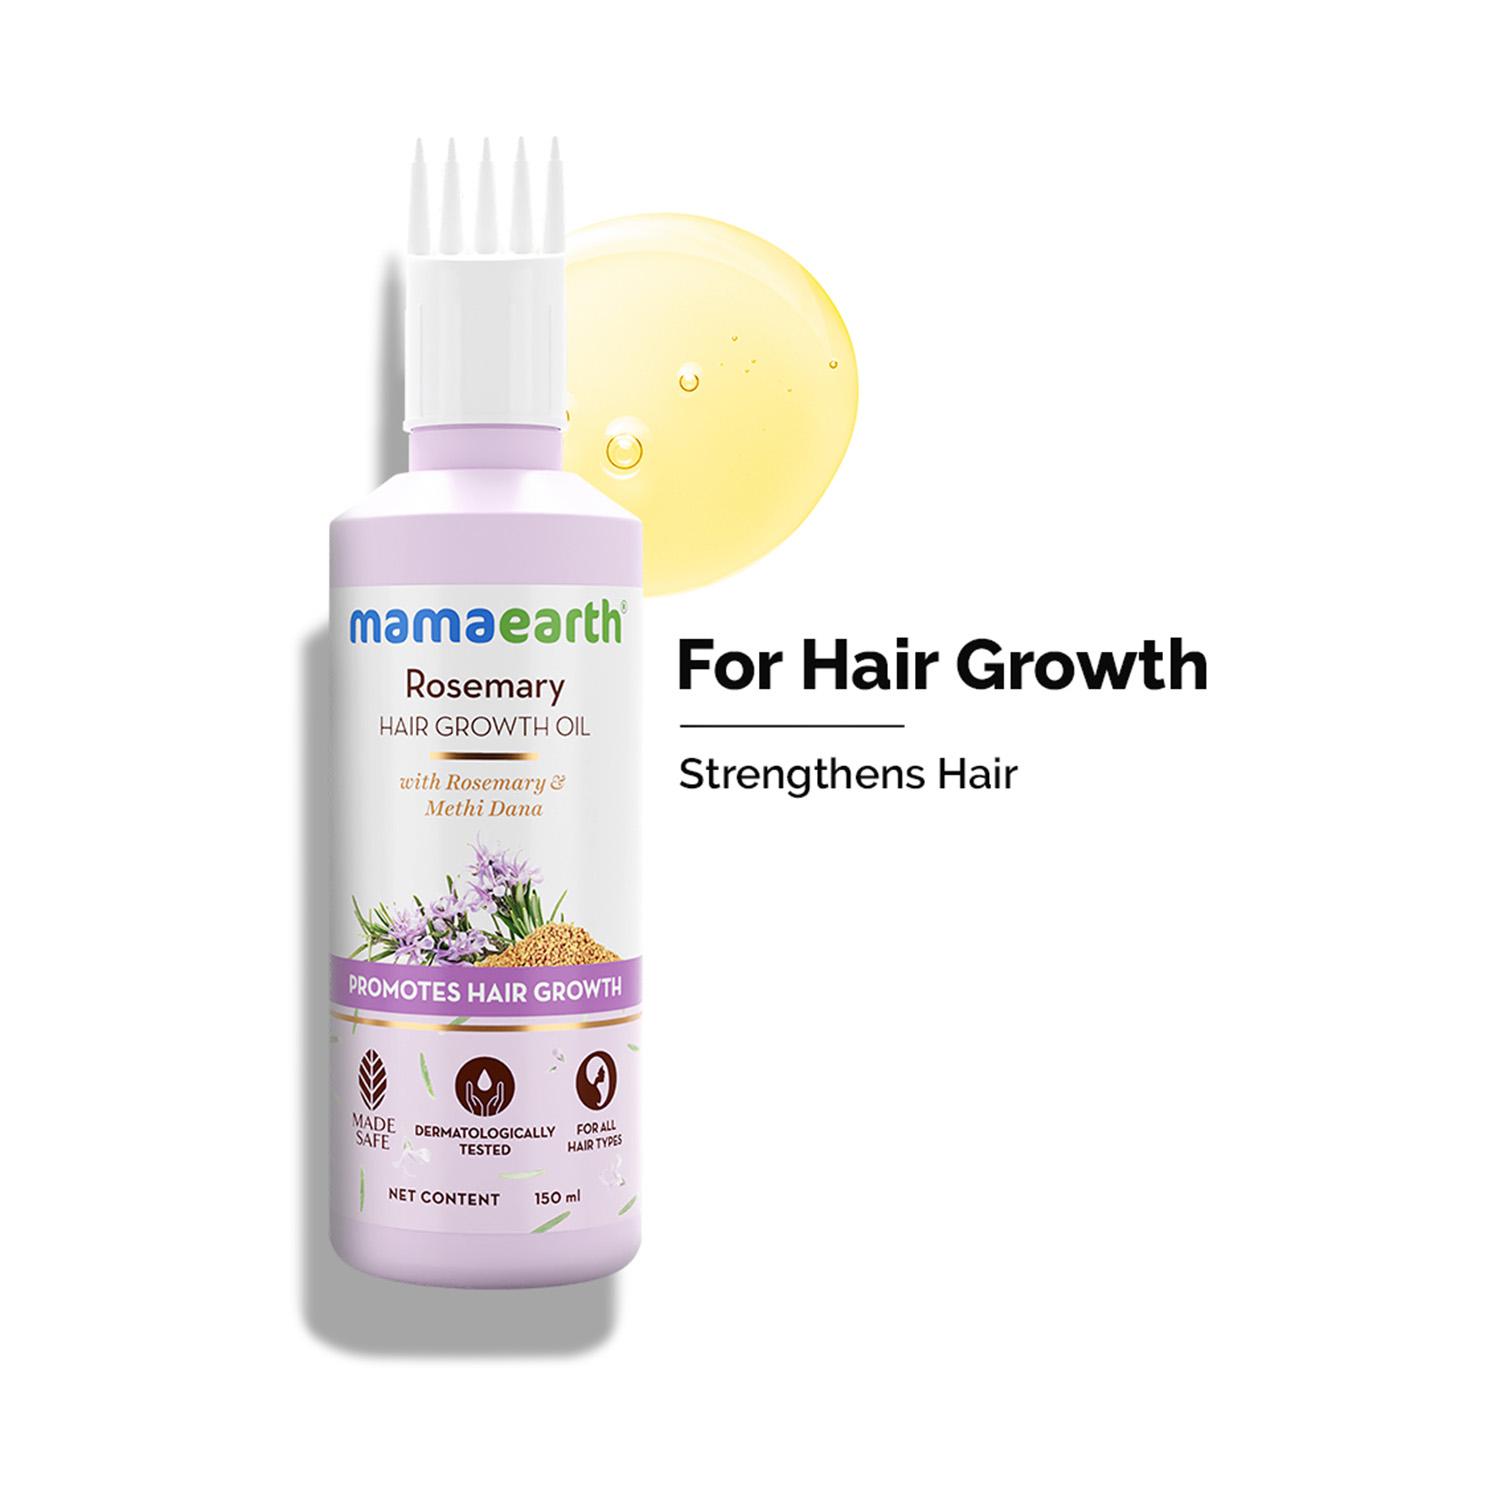 Mamaearth | Mamaearth Rosemary Hair Growth Oil With Rosemary & Methi Dana (150ml)